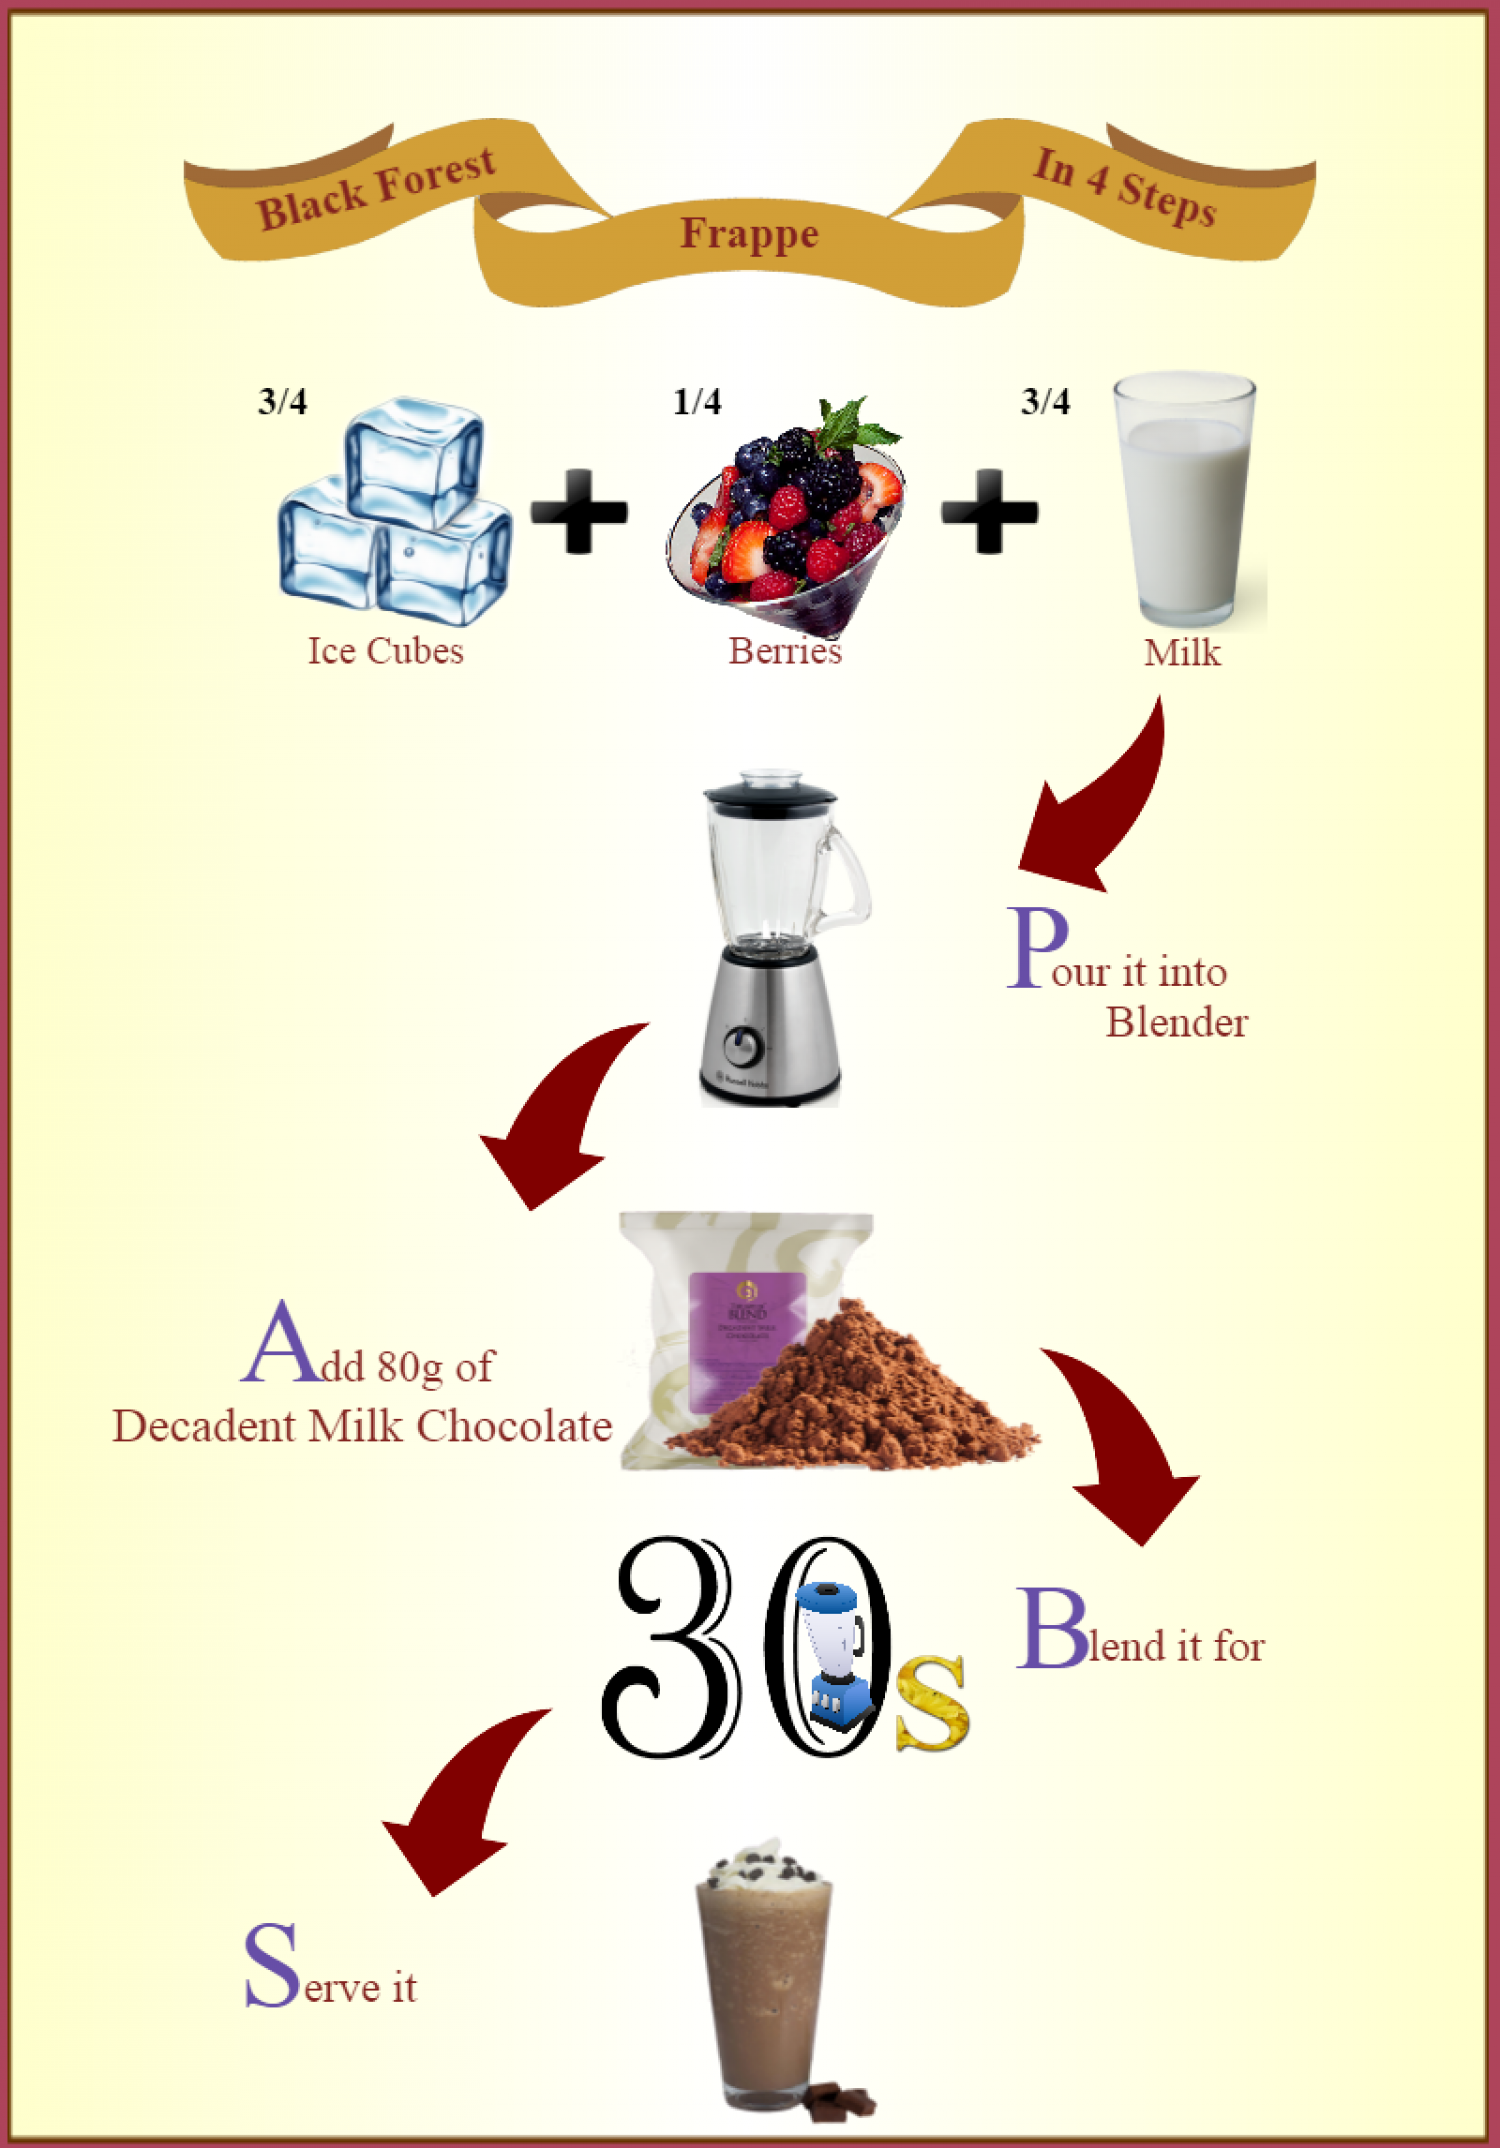 Exclusive Recipe for Decadent Milk Chocolate Infographic